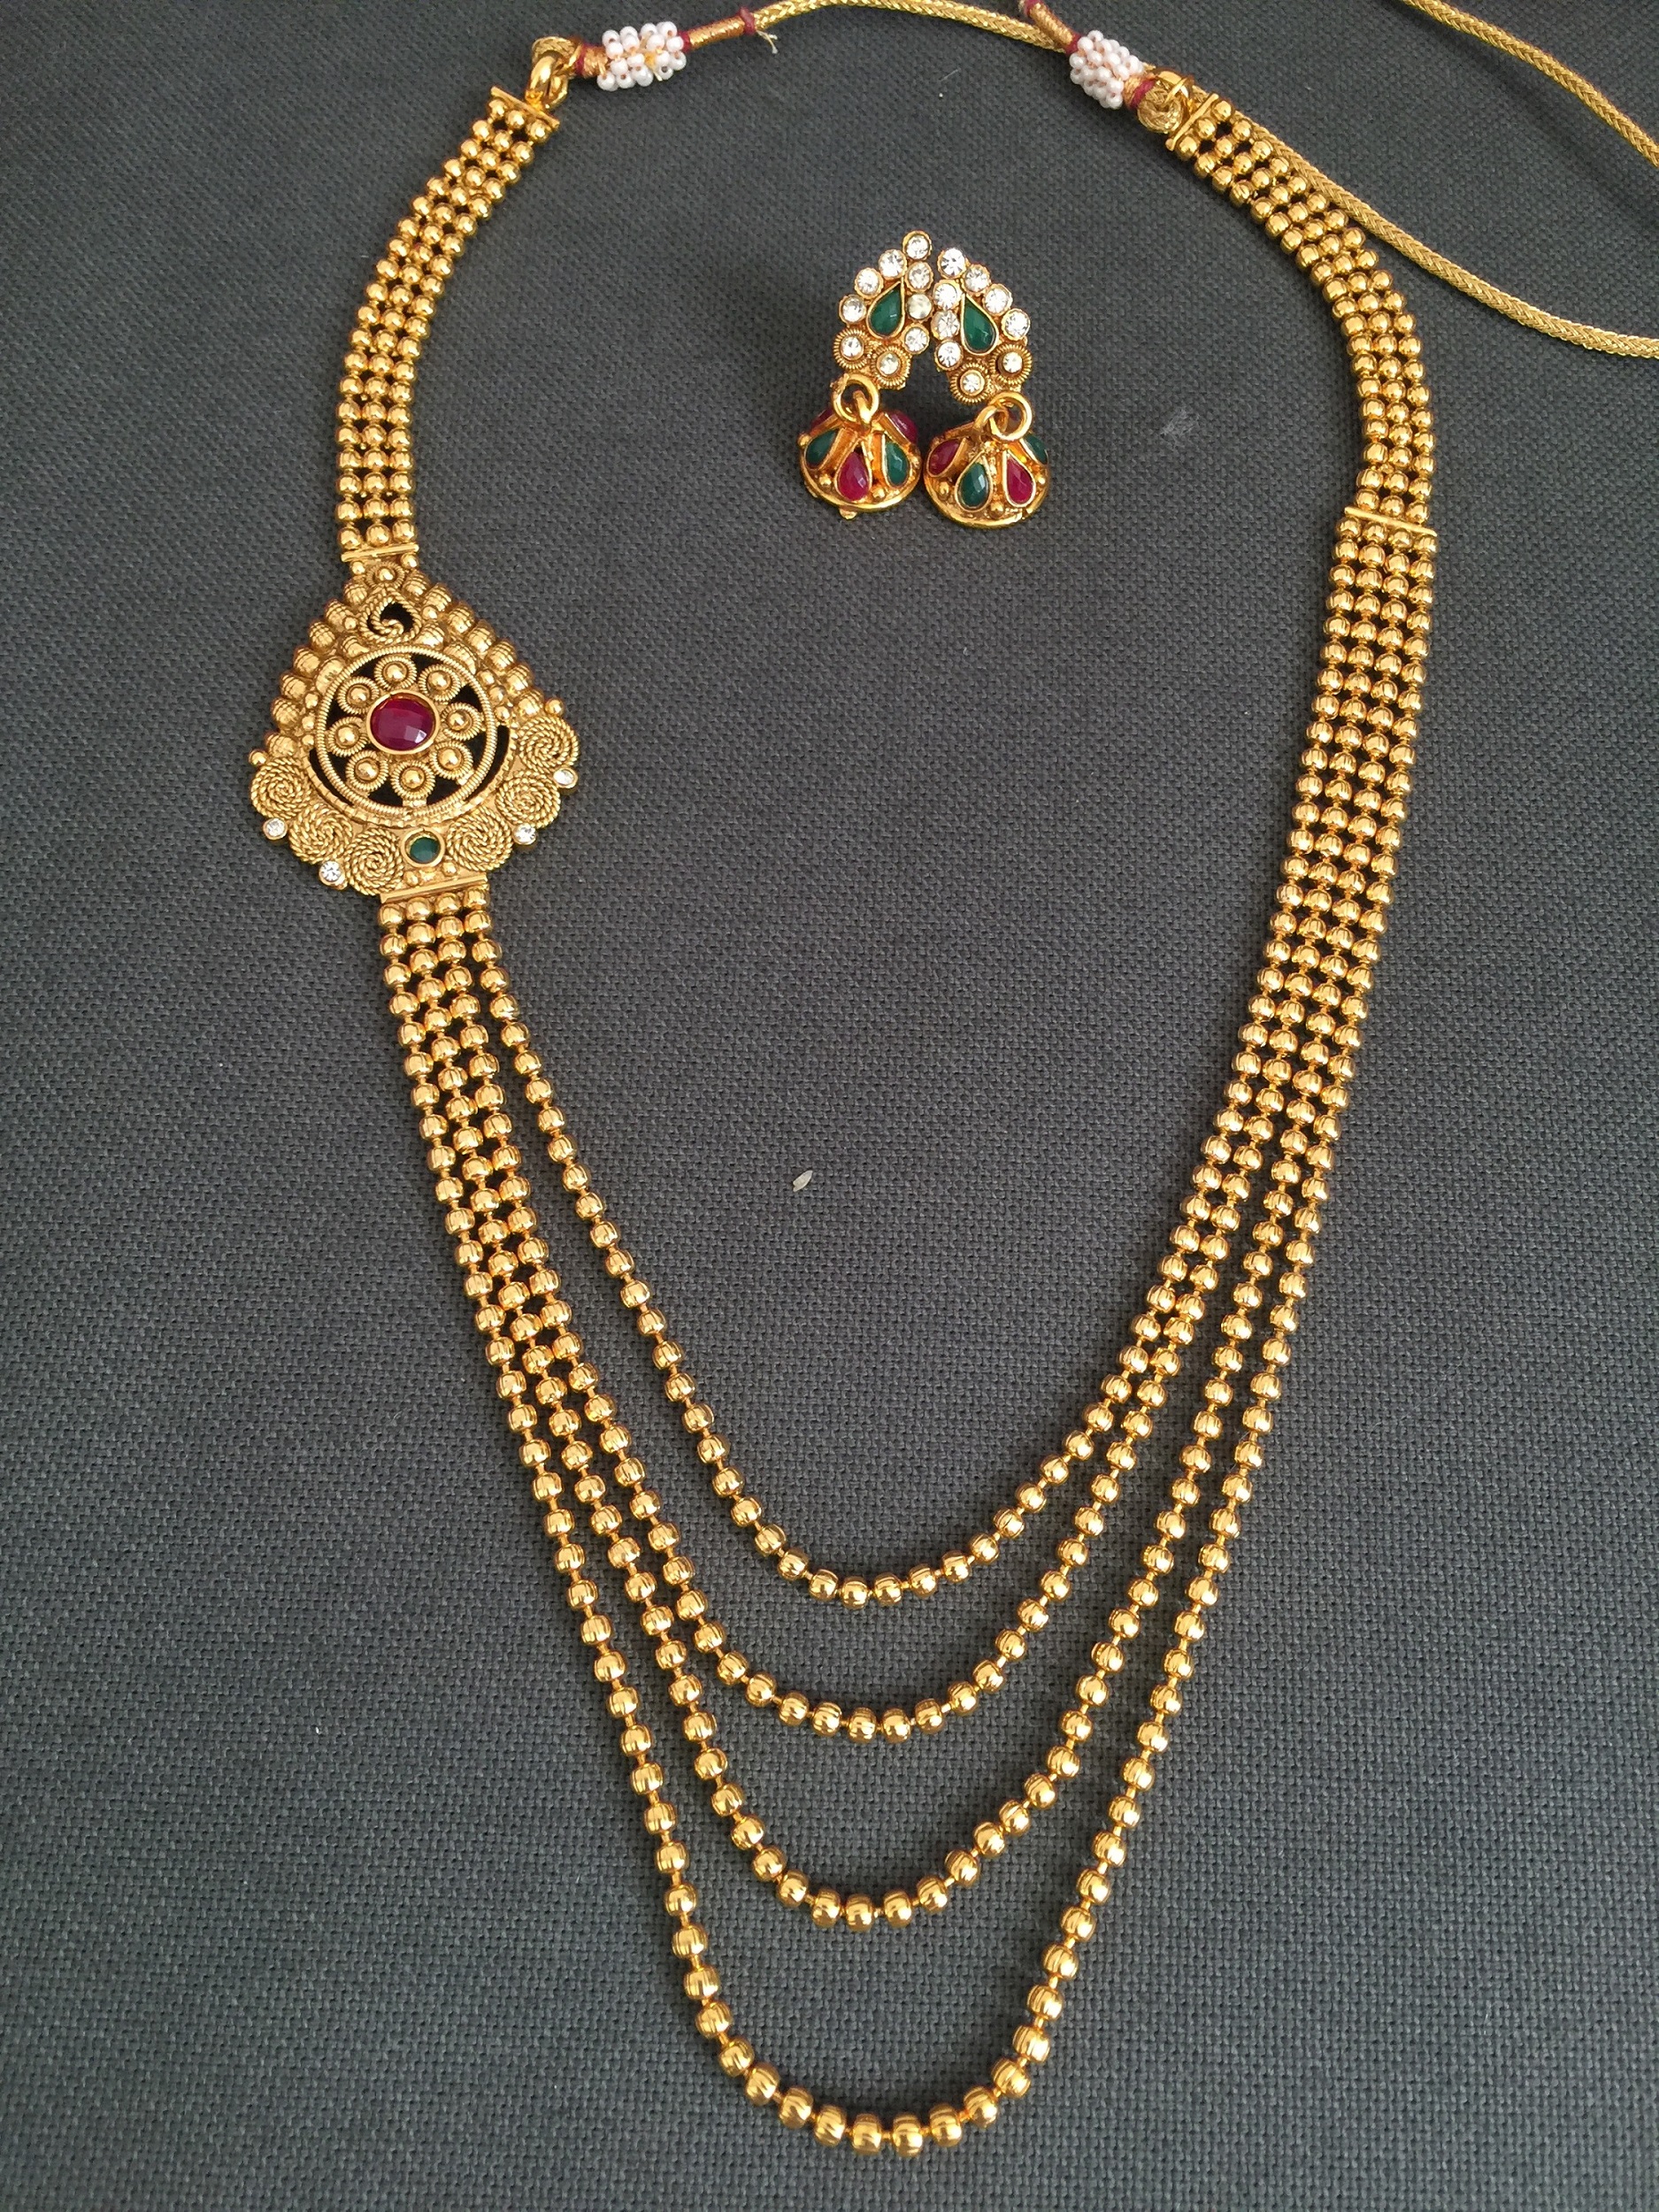 Elegant & Classy Long Traditional Necklace w/ Small Jumka #29094 | Buy ...